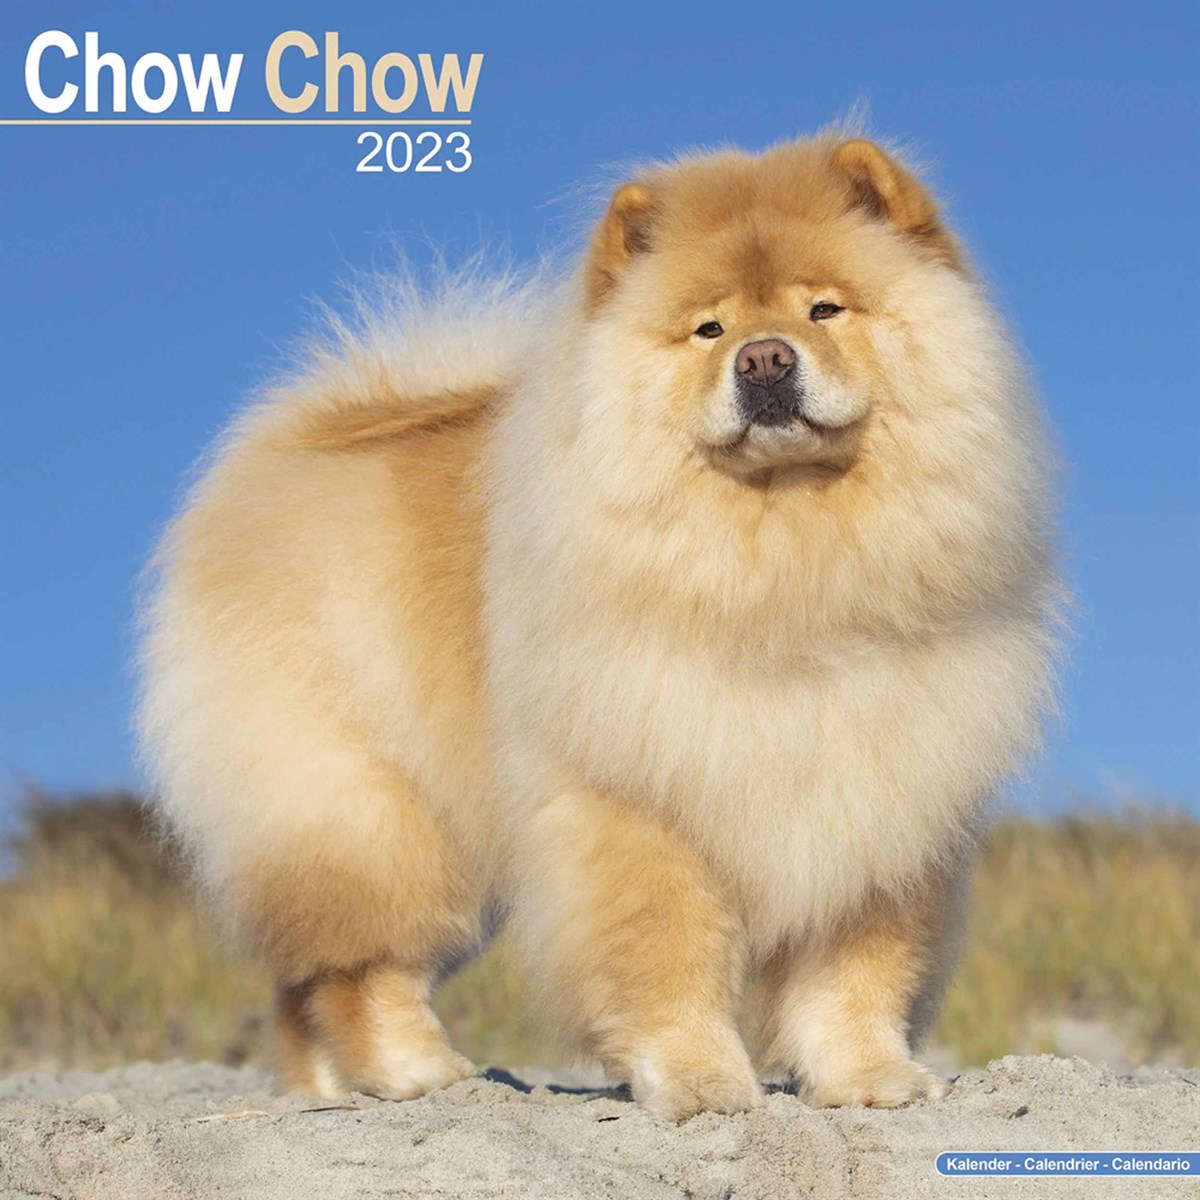 Chow Chow 2023 Calendars